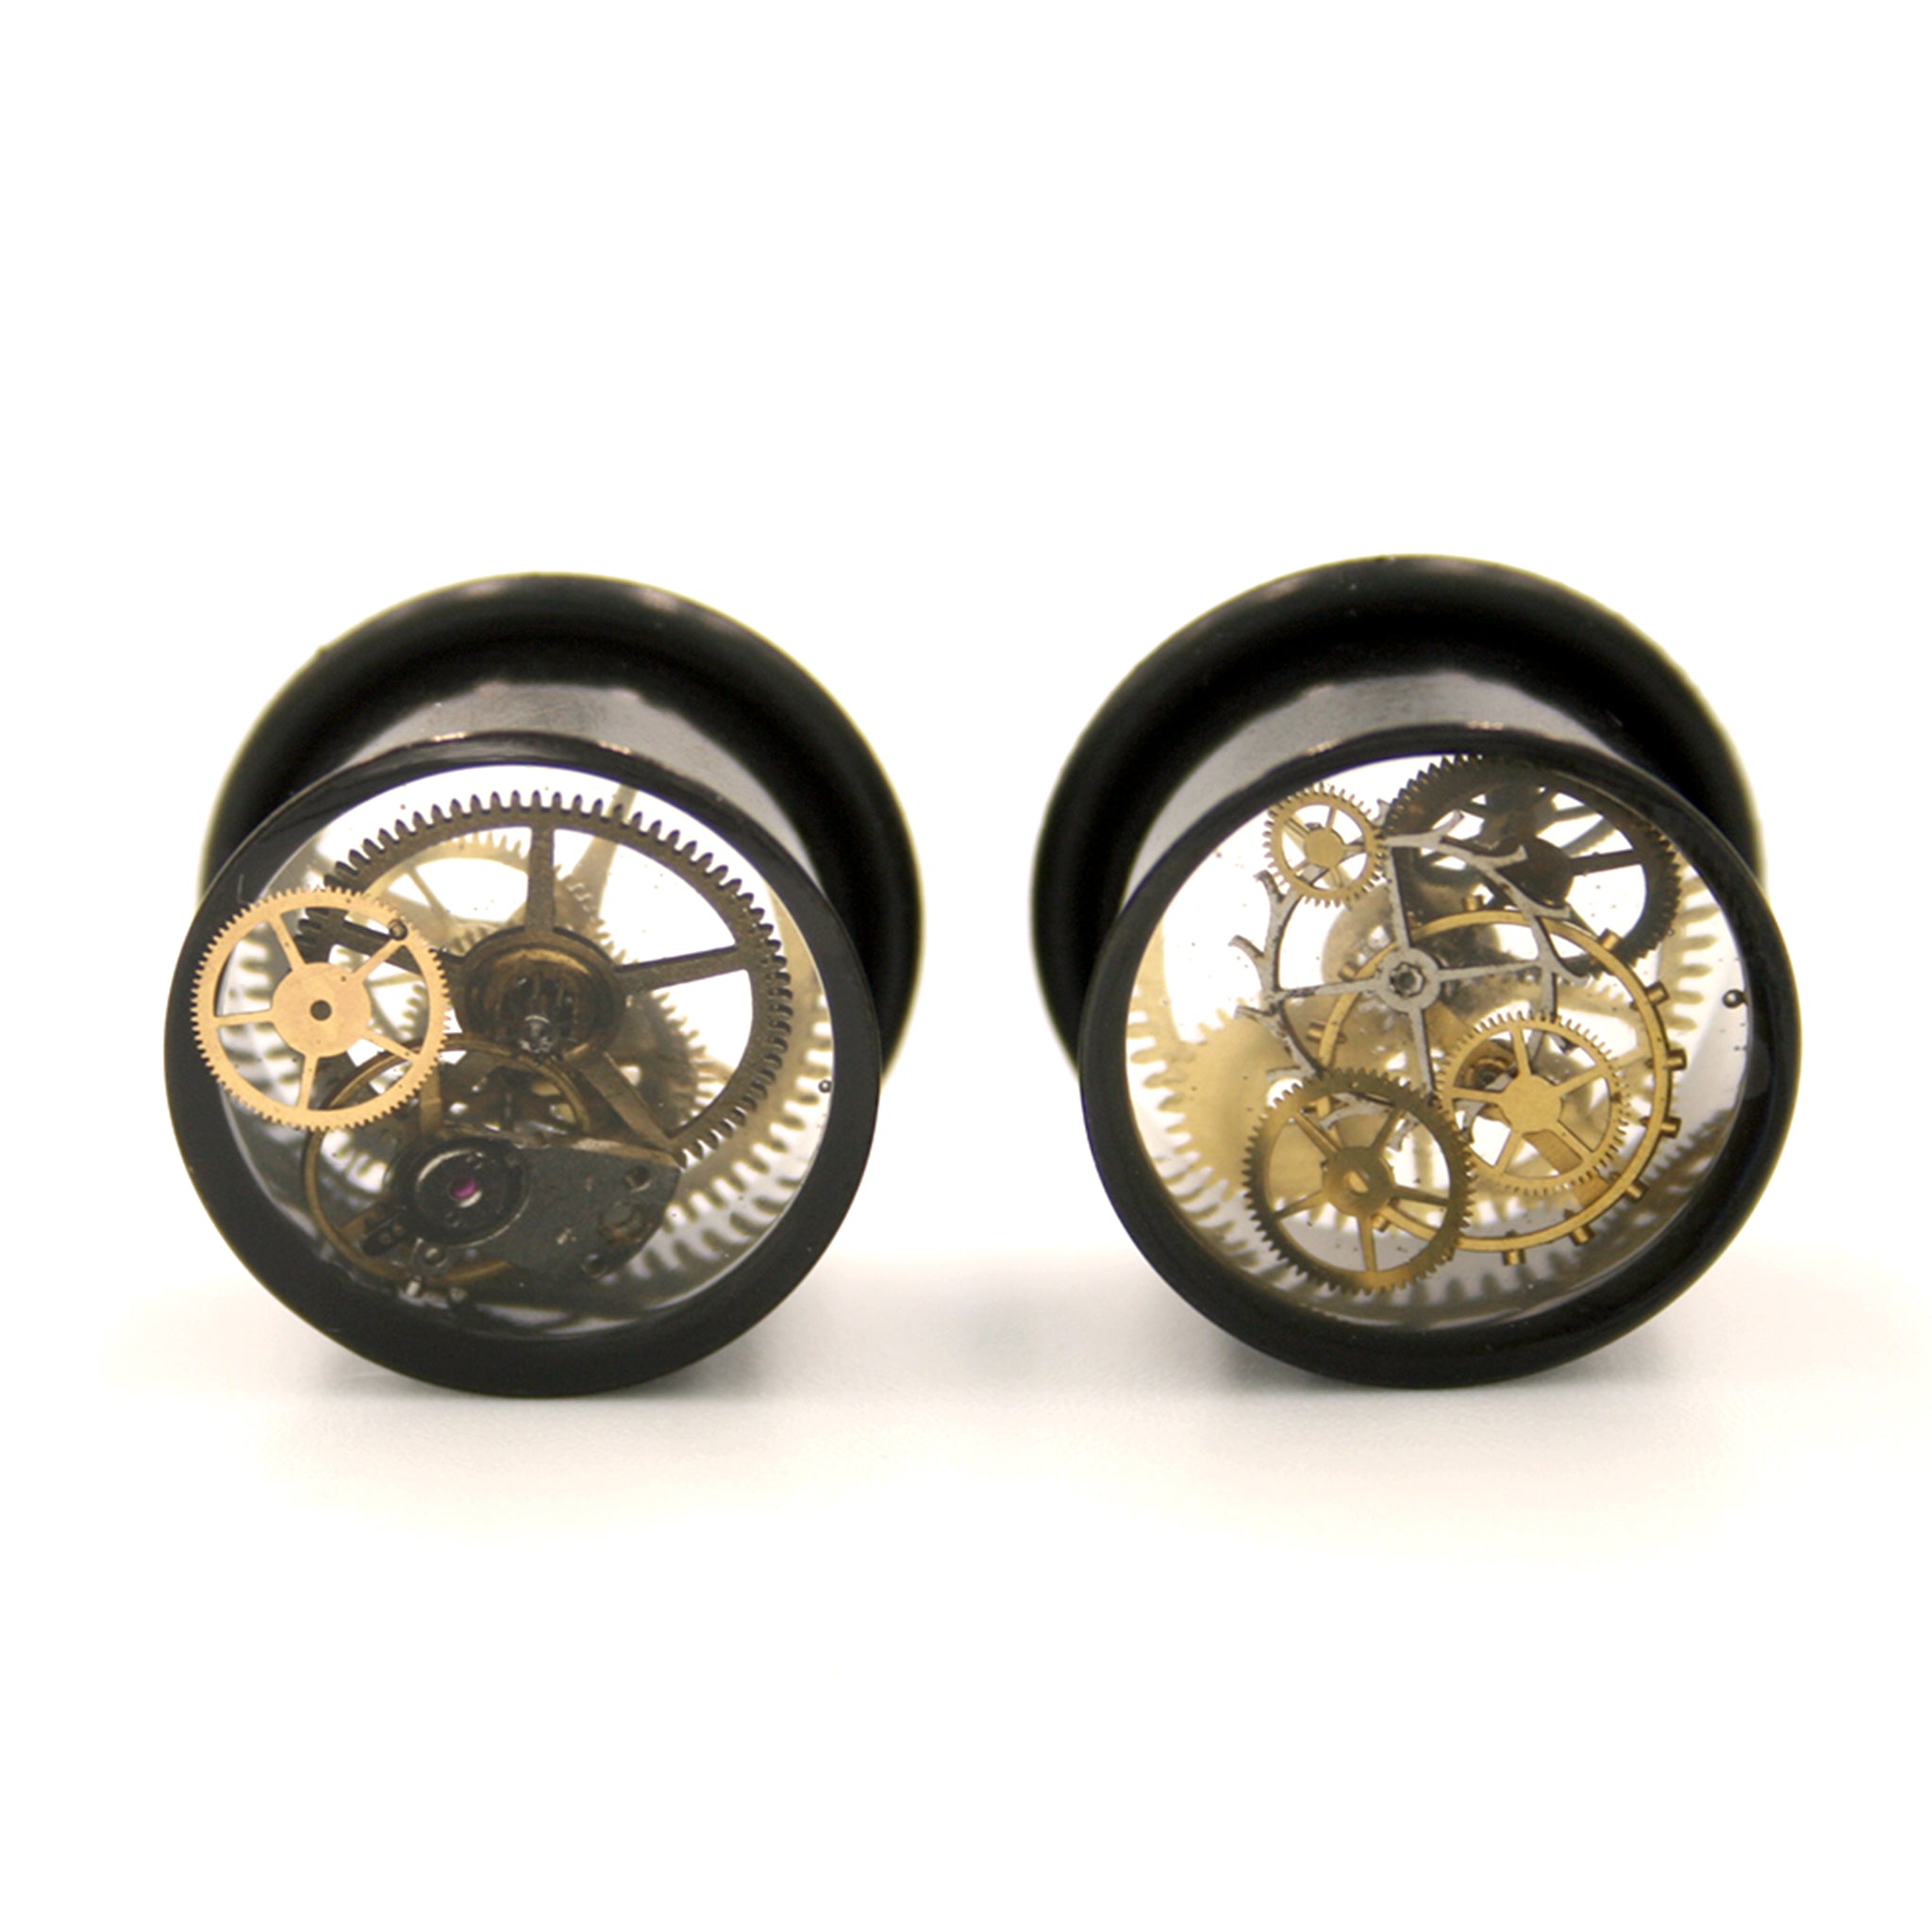 14mm o-ring black ear gauges in steampunk style